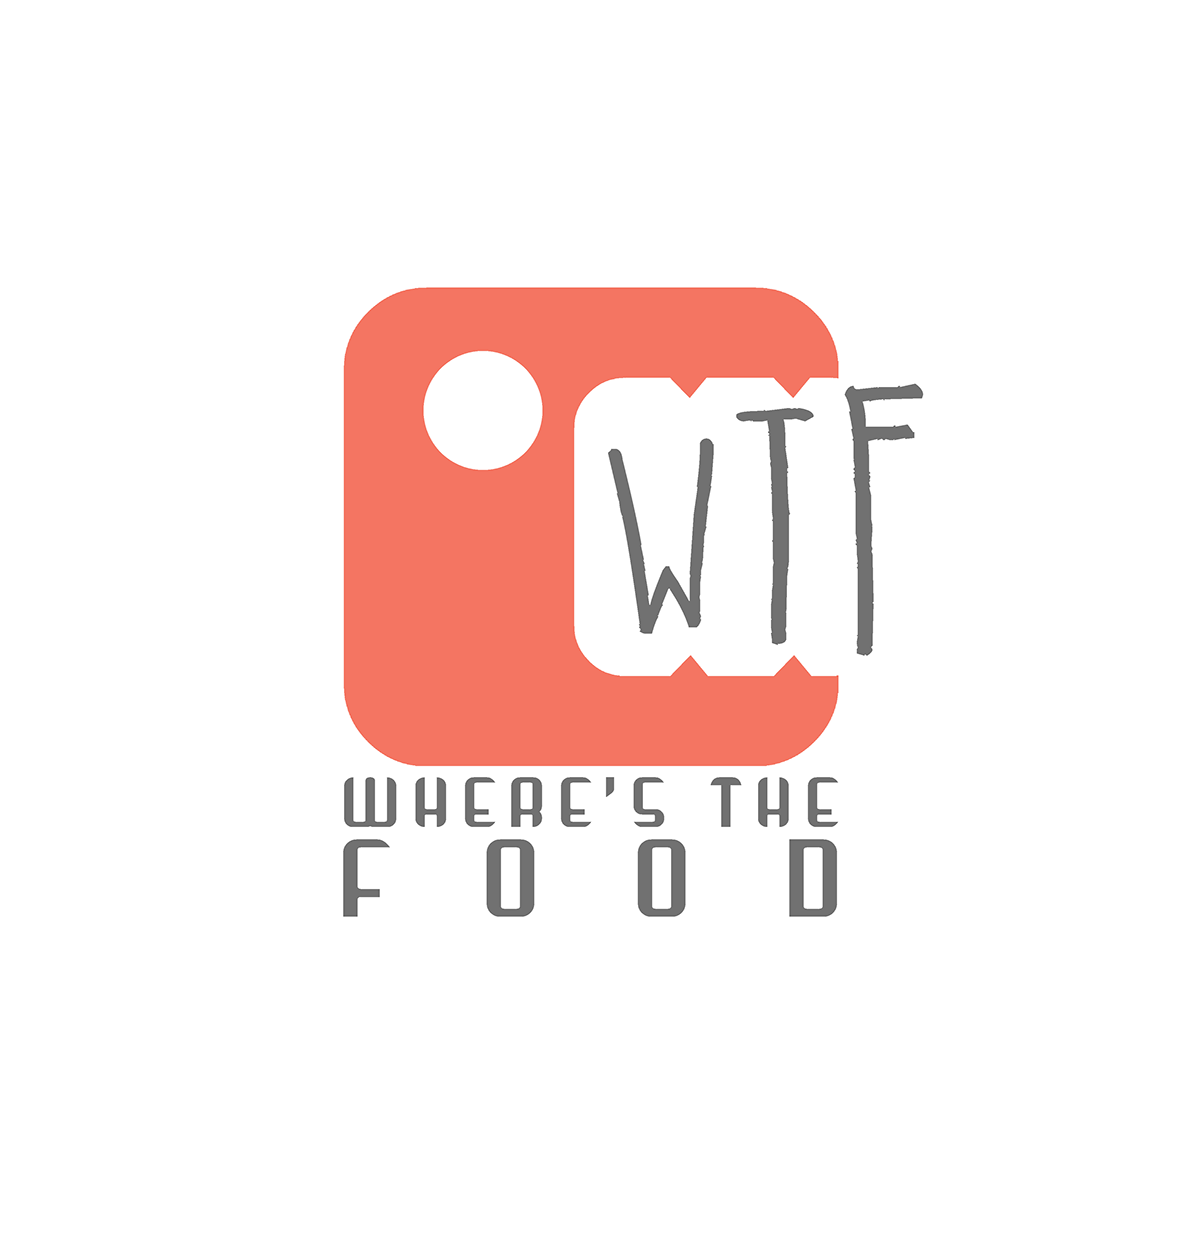 logo cafe wtf